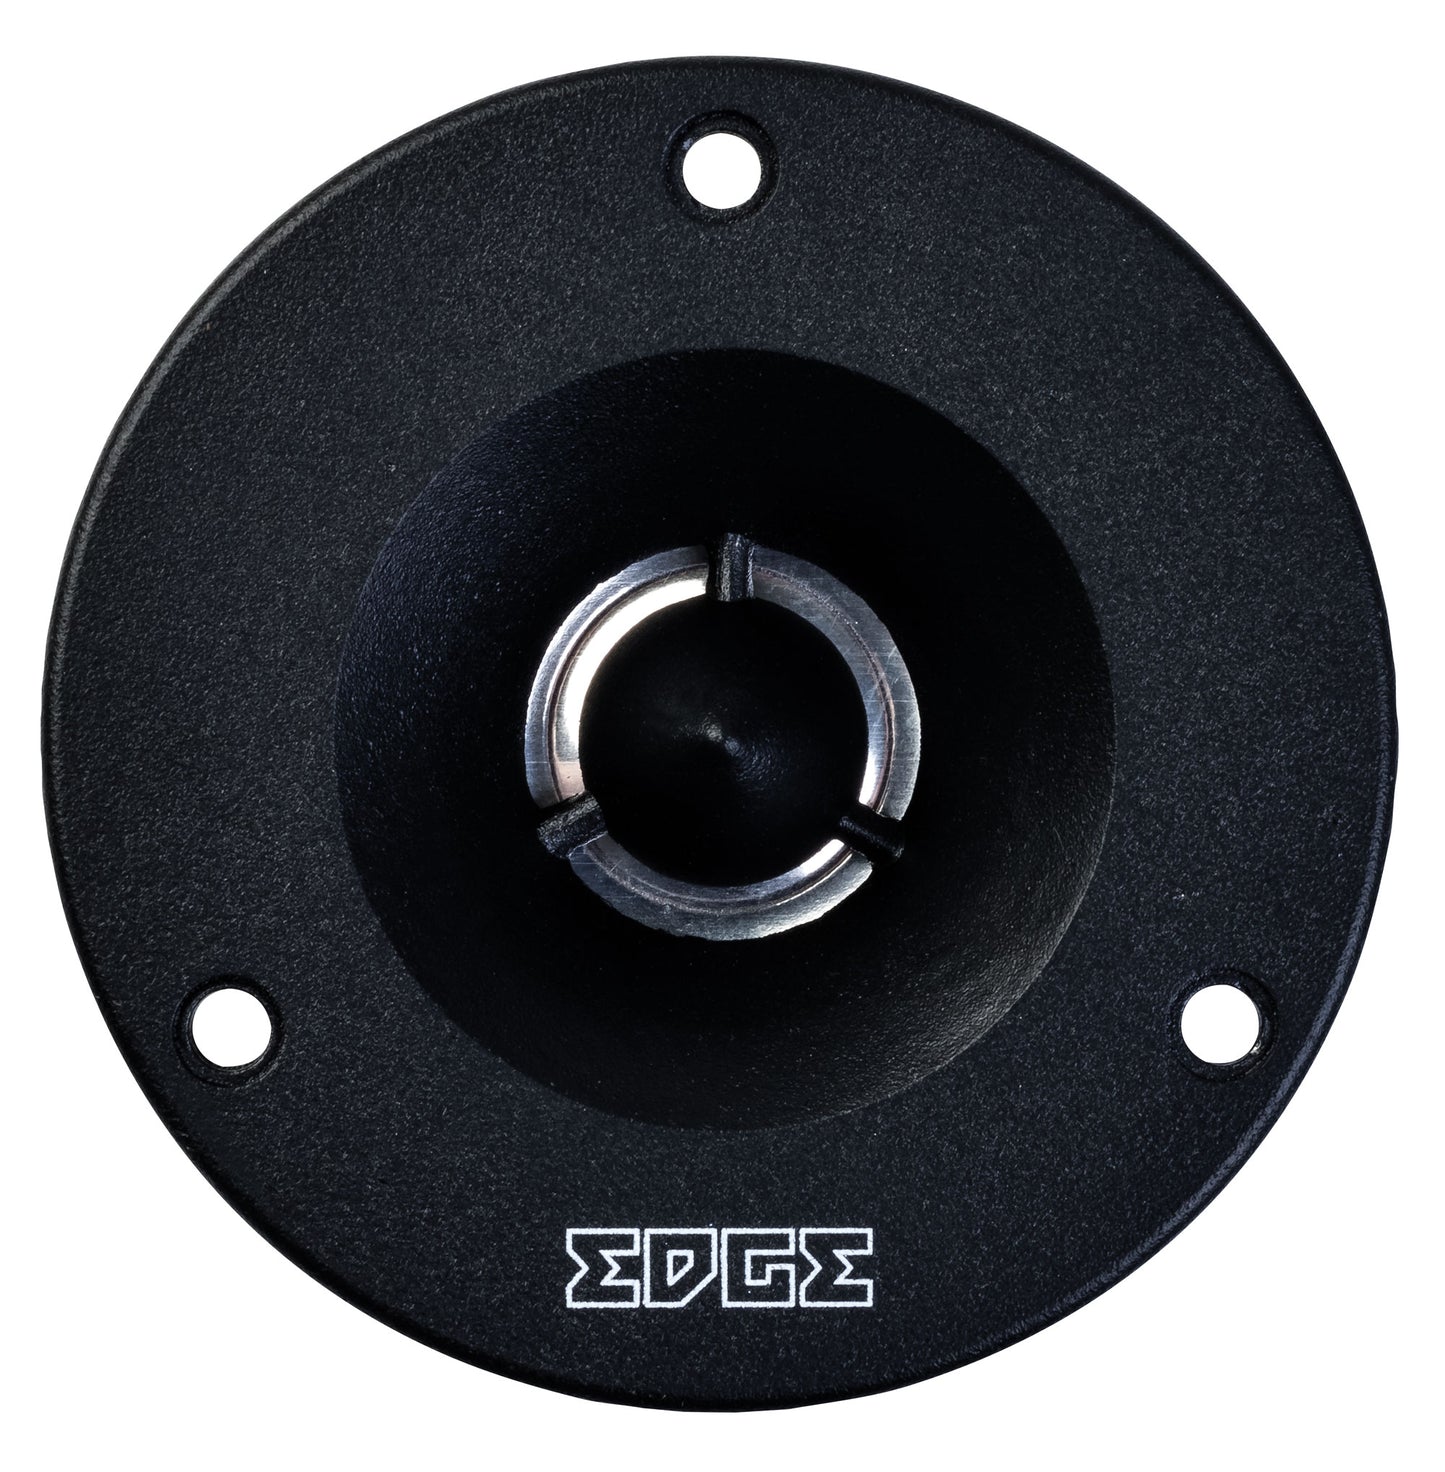 EDPRO36BT-E7 | EDGE DB Series 3.7 inch 160 watts Pro Audio Tweeters - Pair